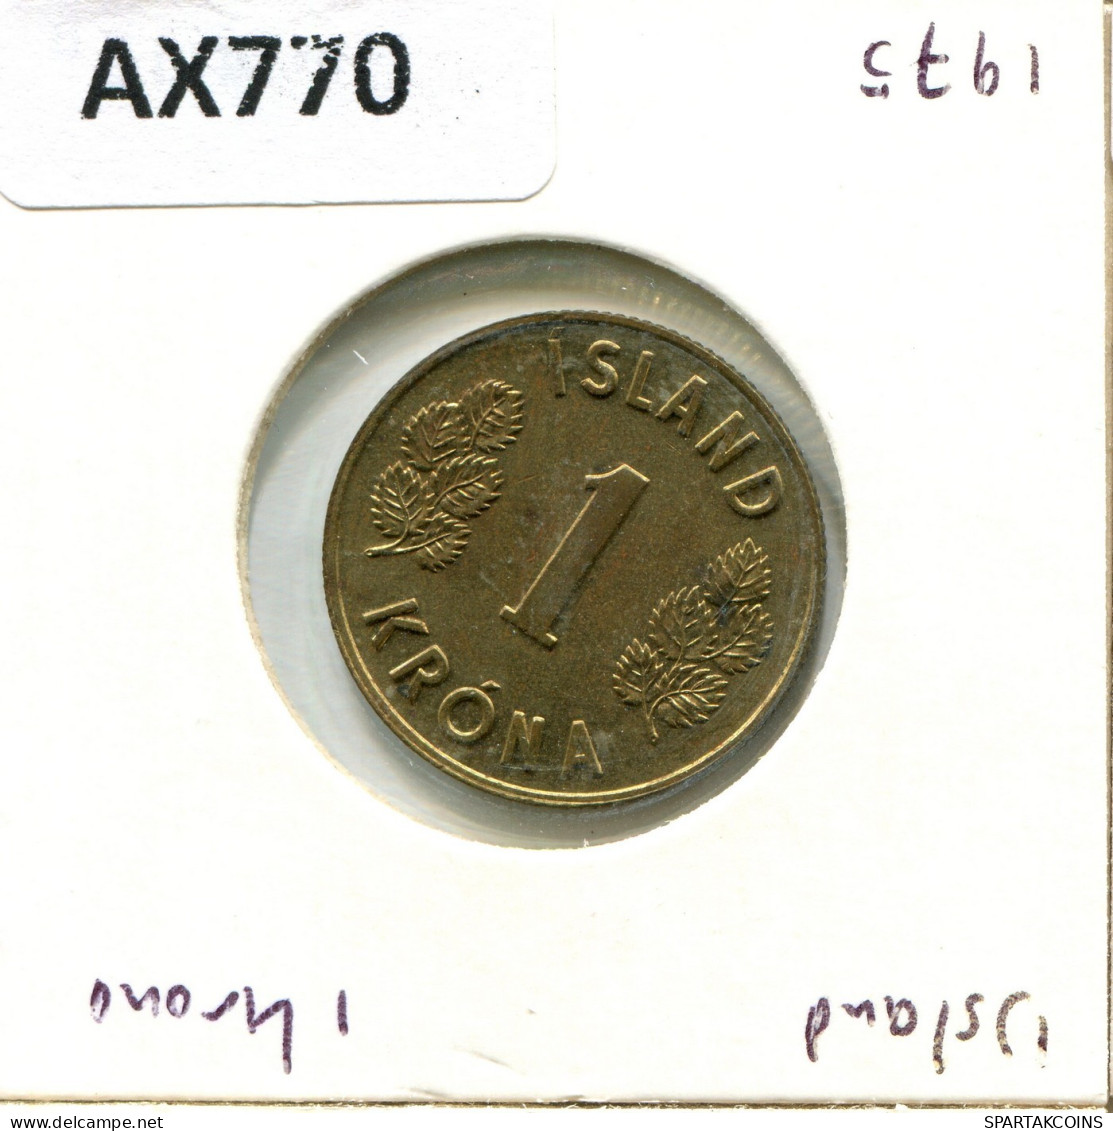 1 KRONA 1975 ICELAND Coin #AX770.U.A - Islandia